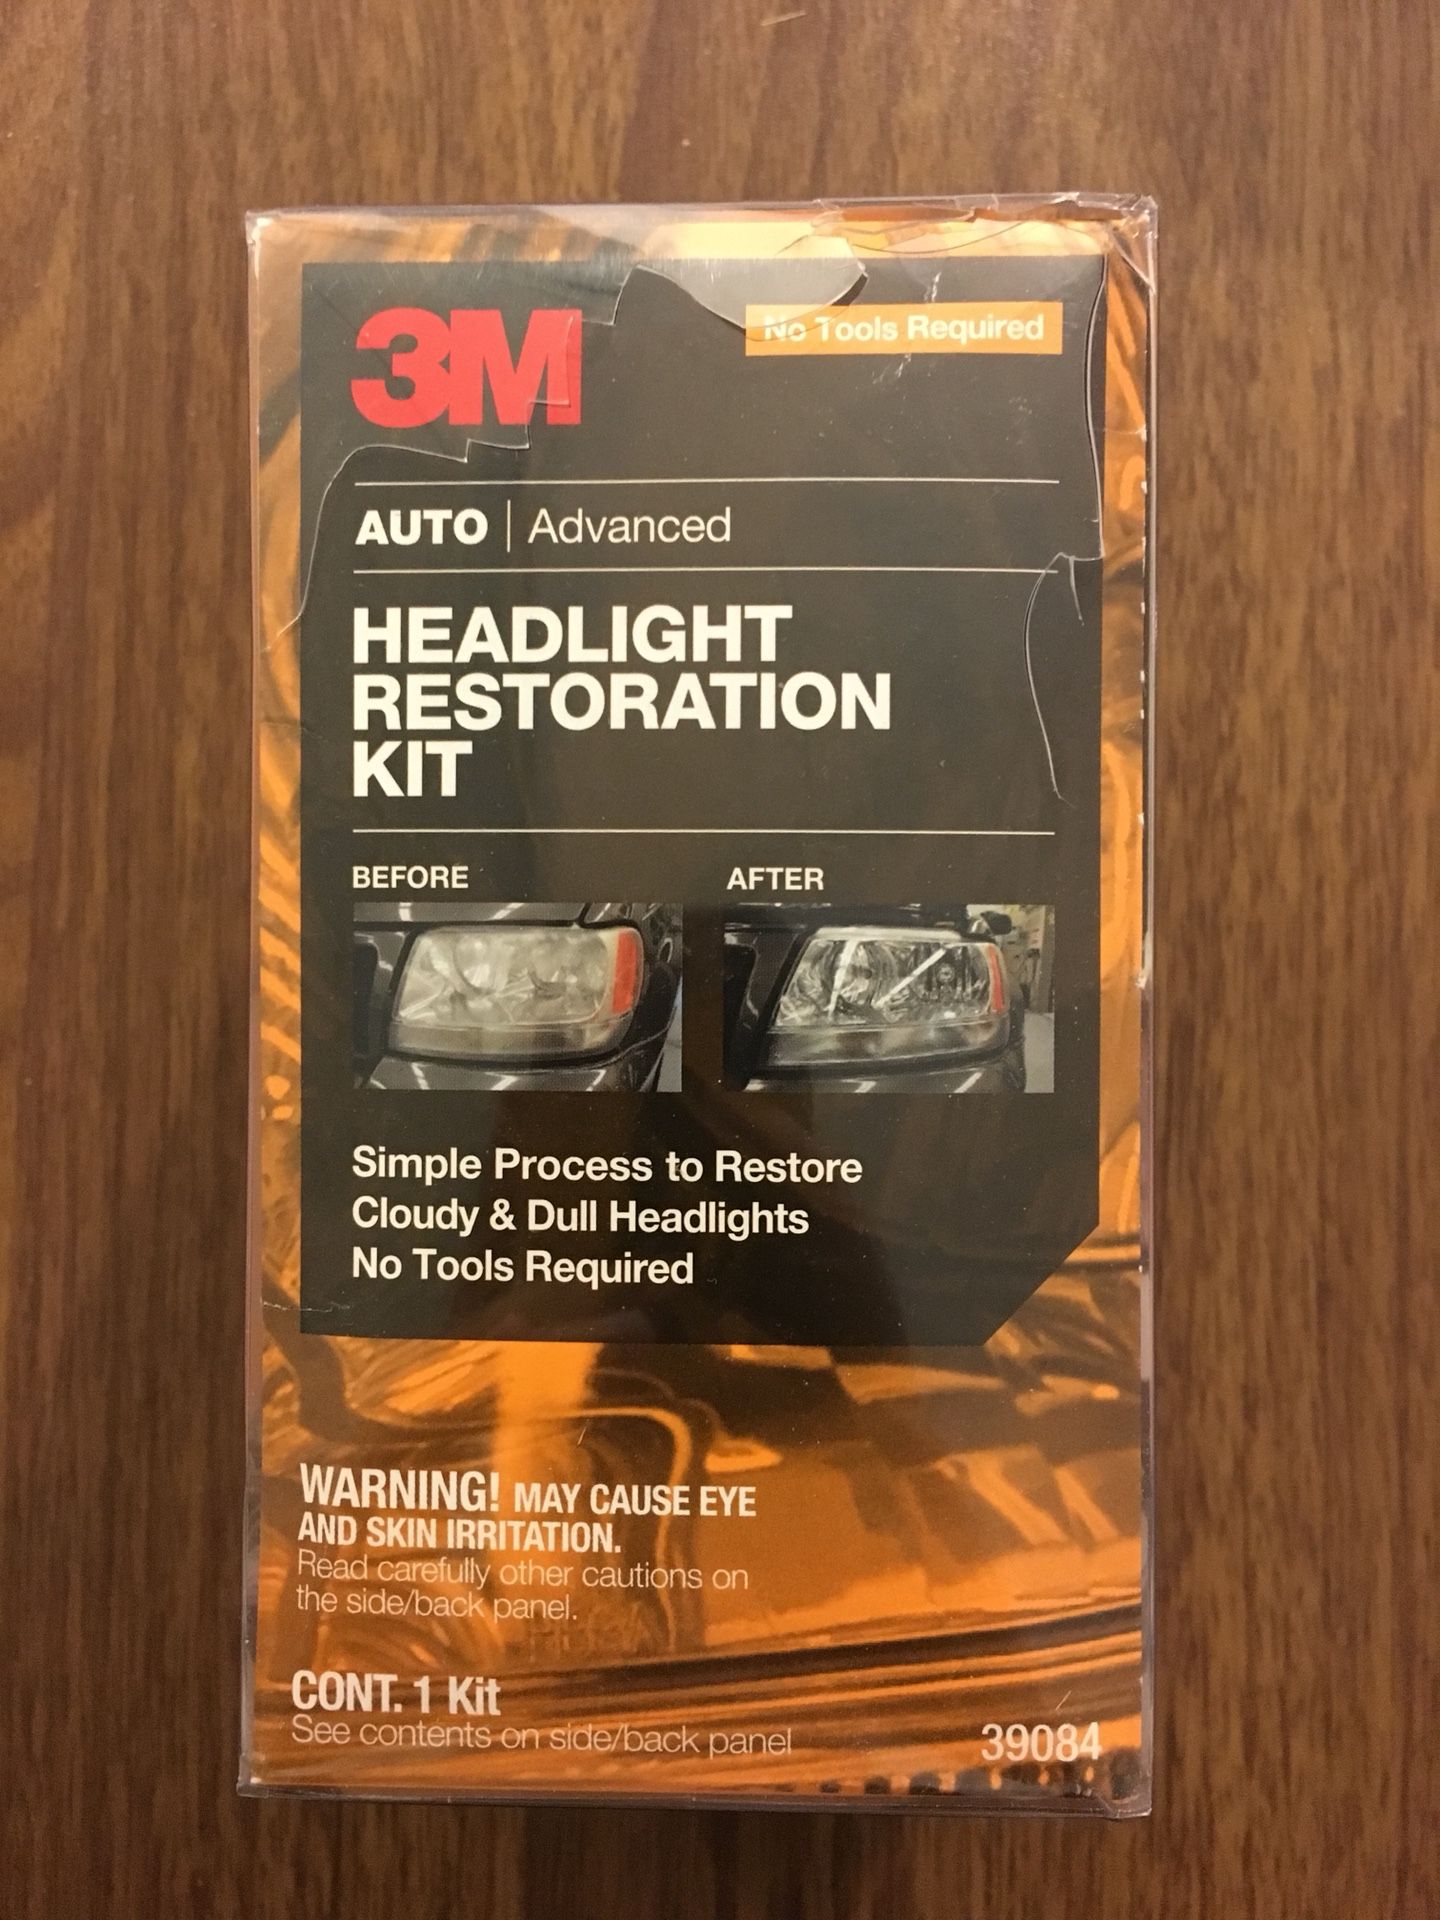 3M headlight restoration kit